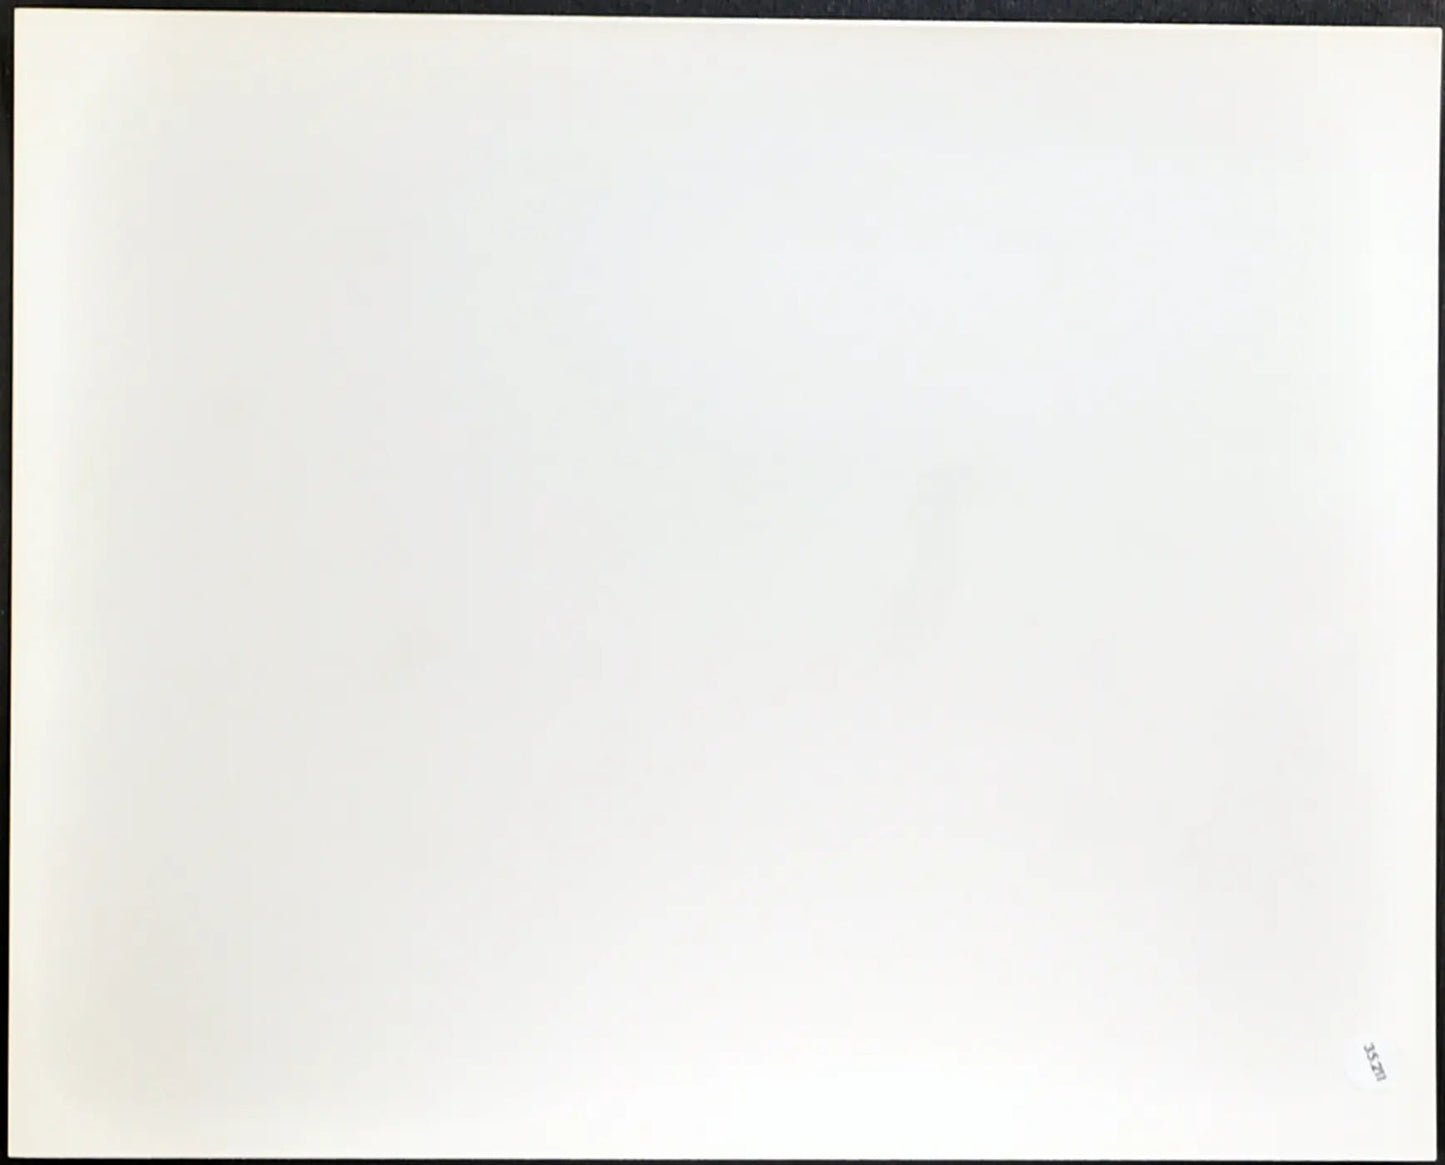 Omar Sharif James Caan Film Funny Lady Ft 35211 - Stampa 20x25 cm - Farabola Stampa ai sali d'argento